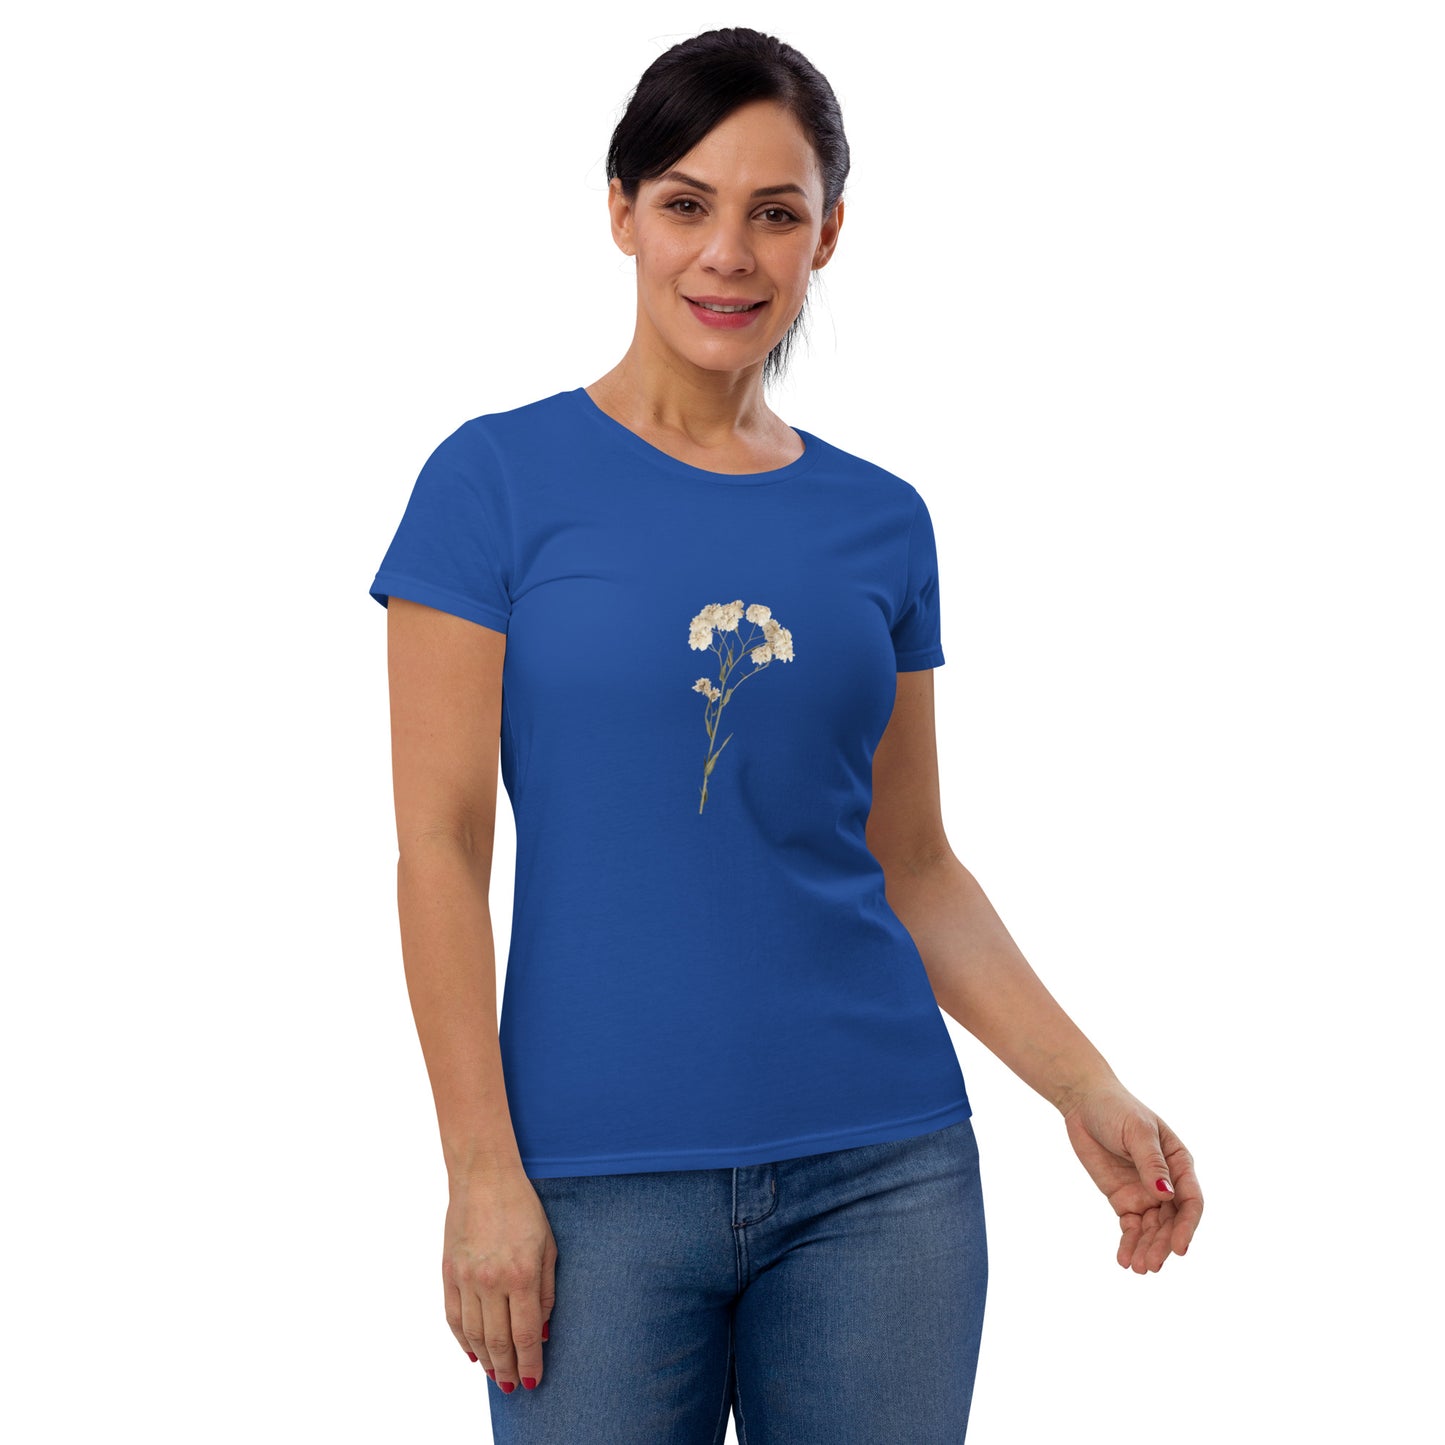 Elegant Floral Short Sleeve T-Shirt for Women | Premium Cotton and Cotton-Polyester Blend